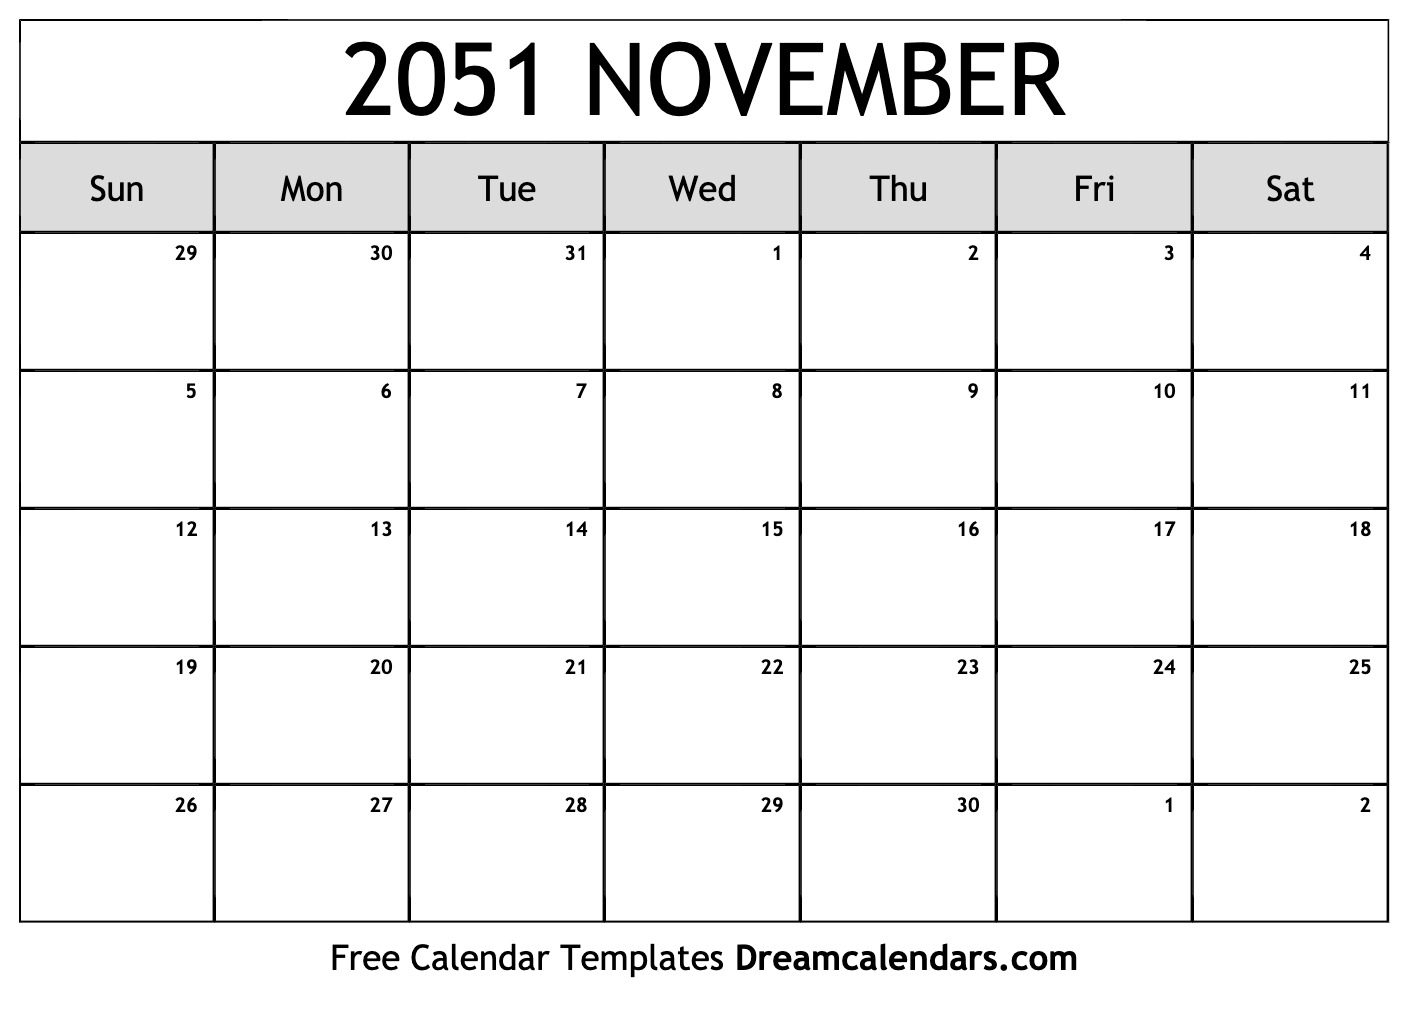 November 2051 Calendar Free Blank Printable With Holidays